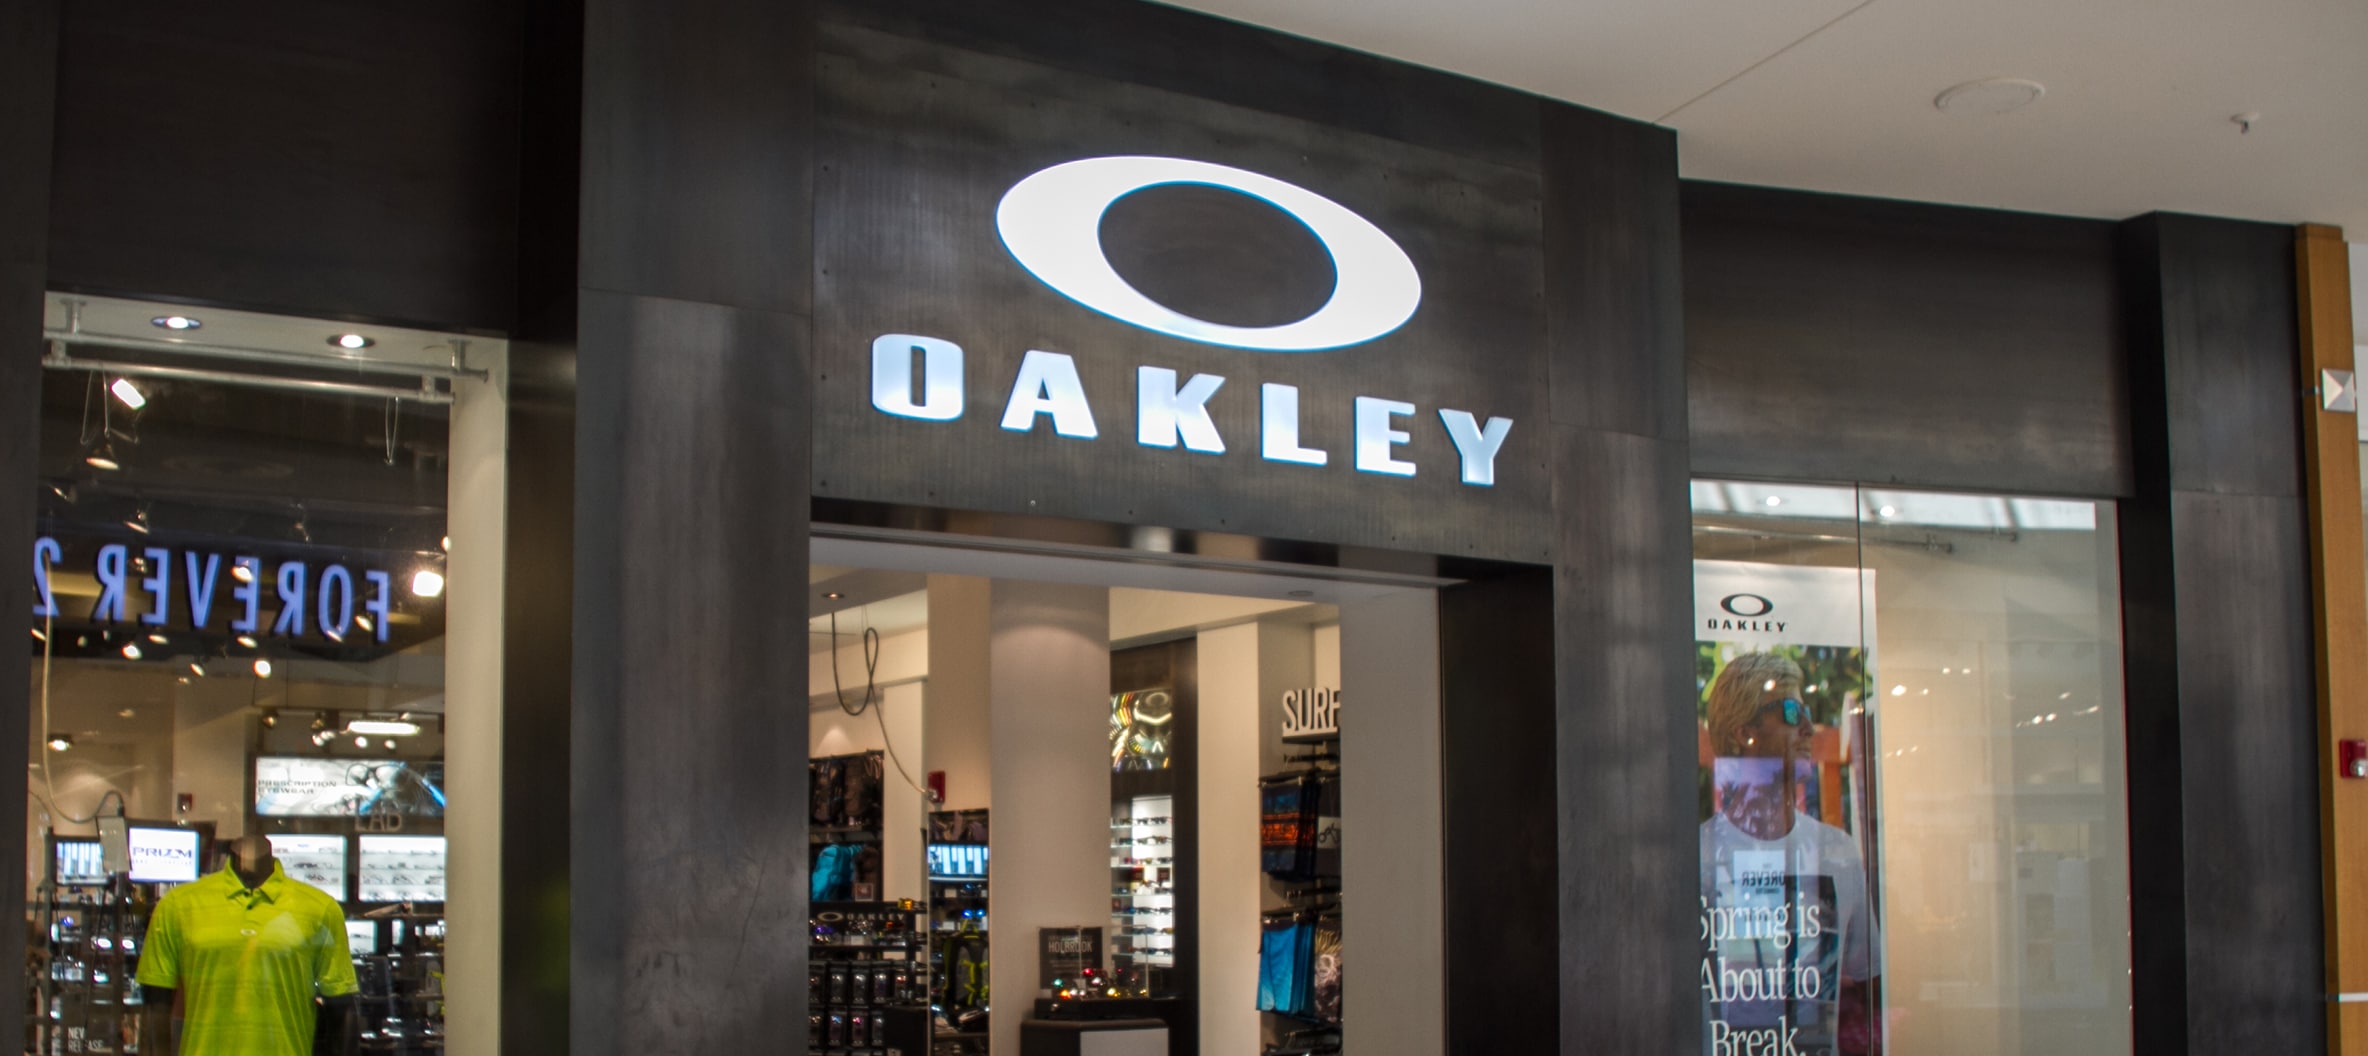 oakley store return policy